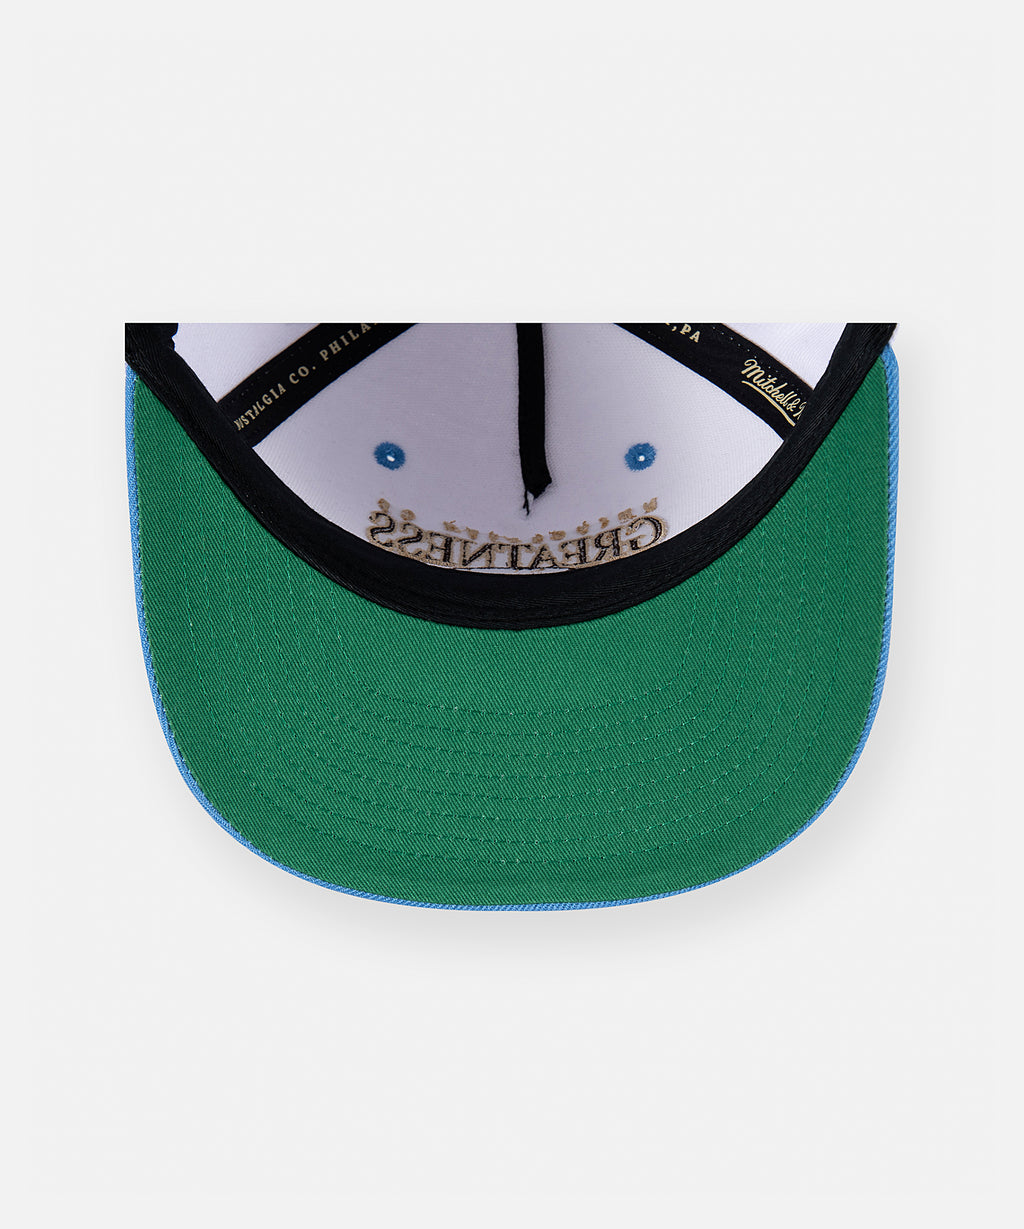  Green under visor on Paper Planes University of Greatness A-Frame Curved Visor.